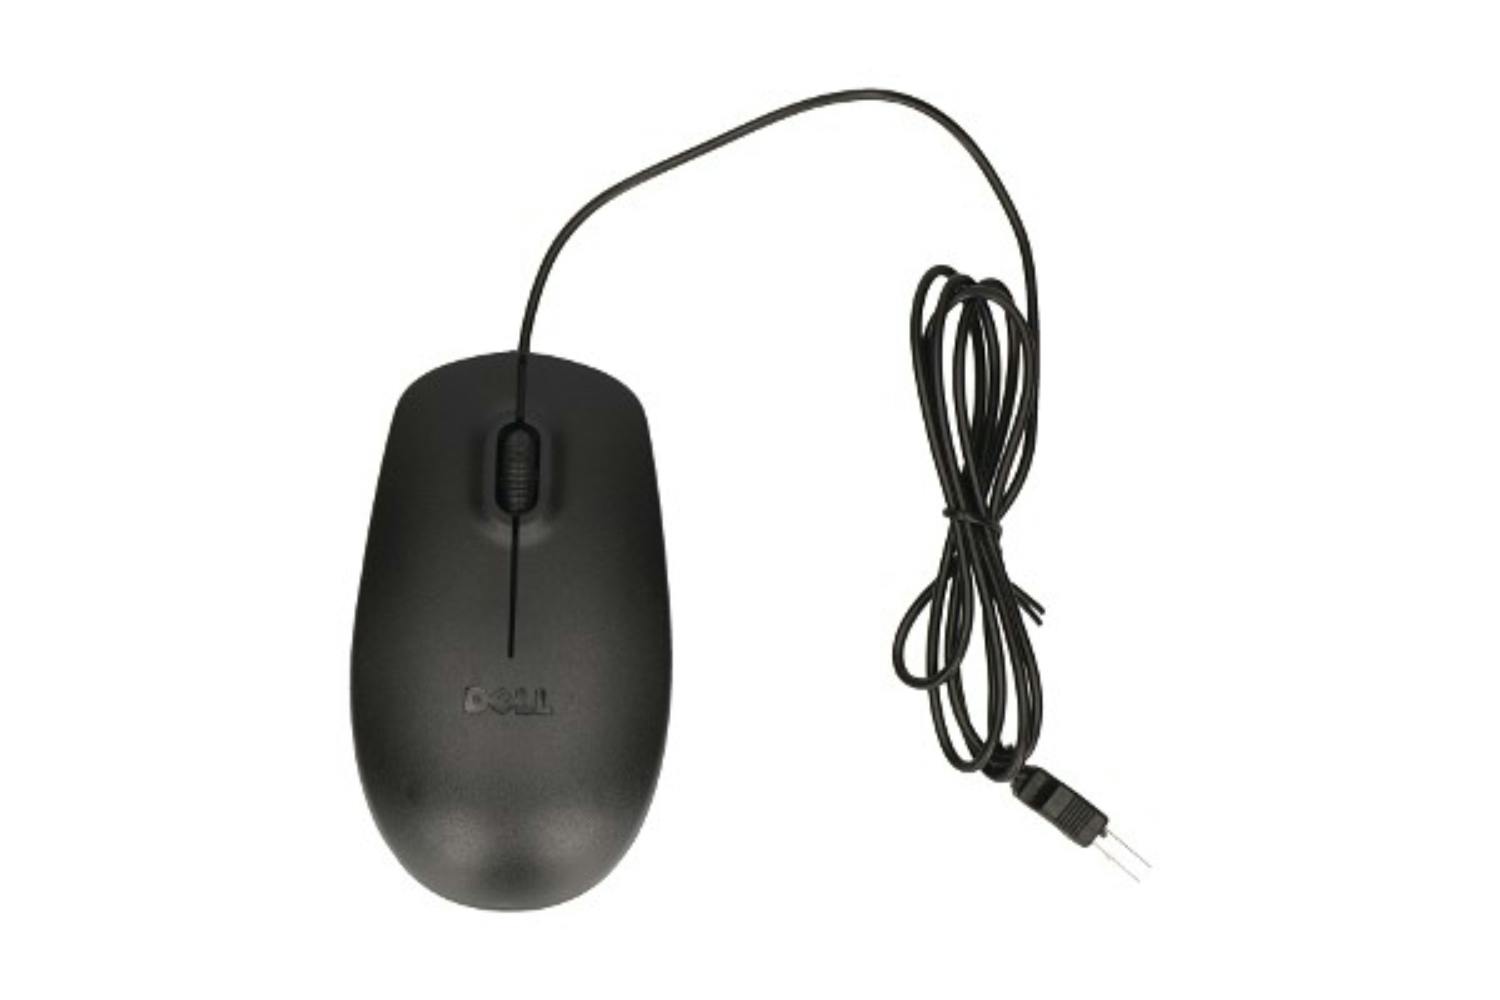 Dell JCYP0 MS116 1000dpi Optical Mouse